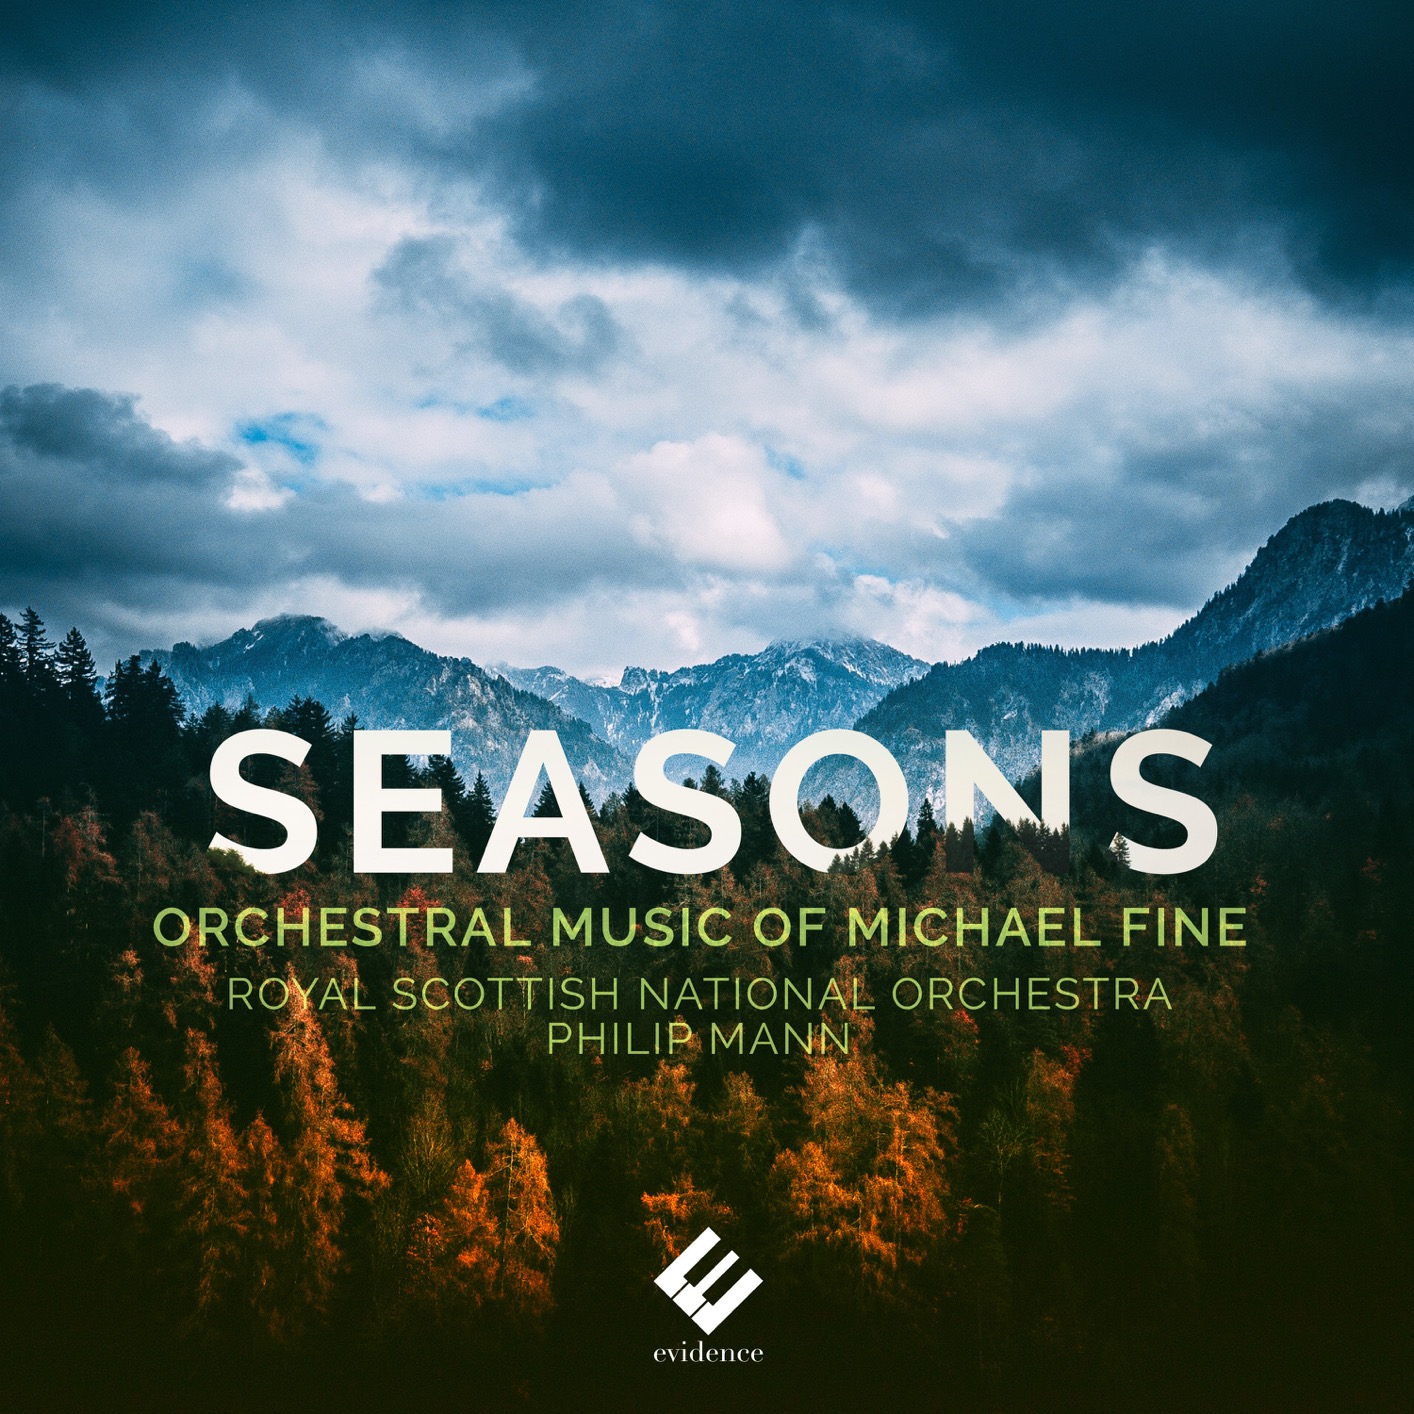 Royal Scottish National Orchestra & Philip Mann - Seasons: Orchestral Music of Michael Fine (2019) [FLAC 24bit/96kHz]